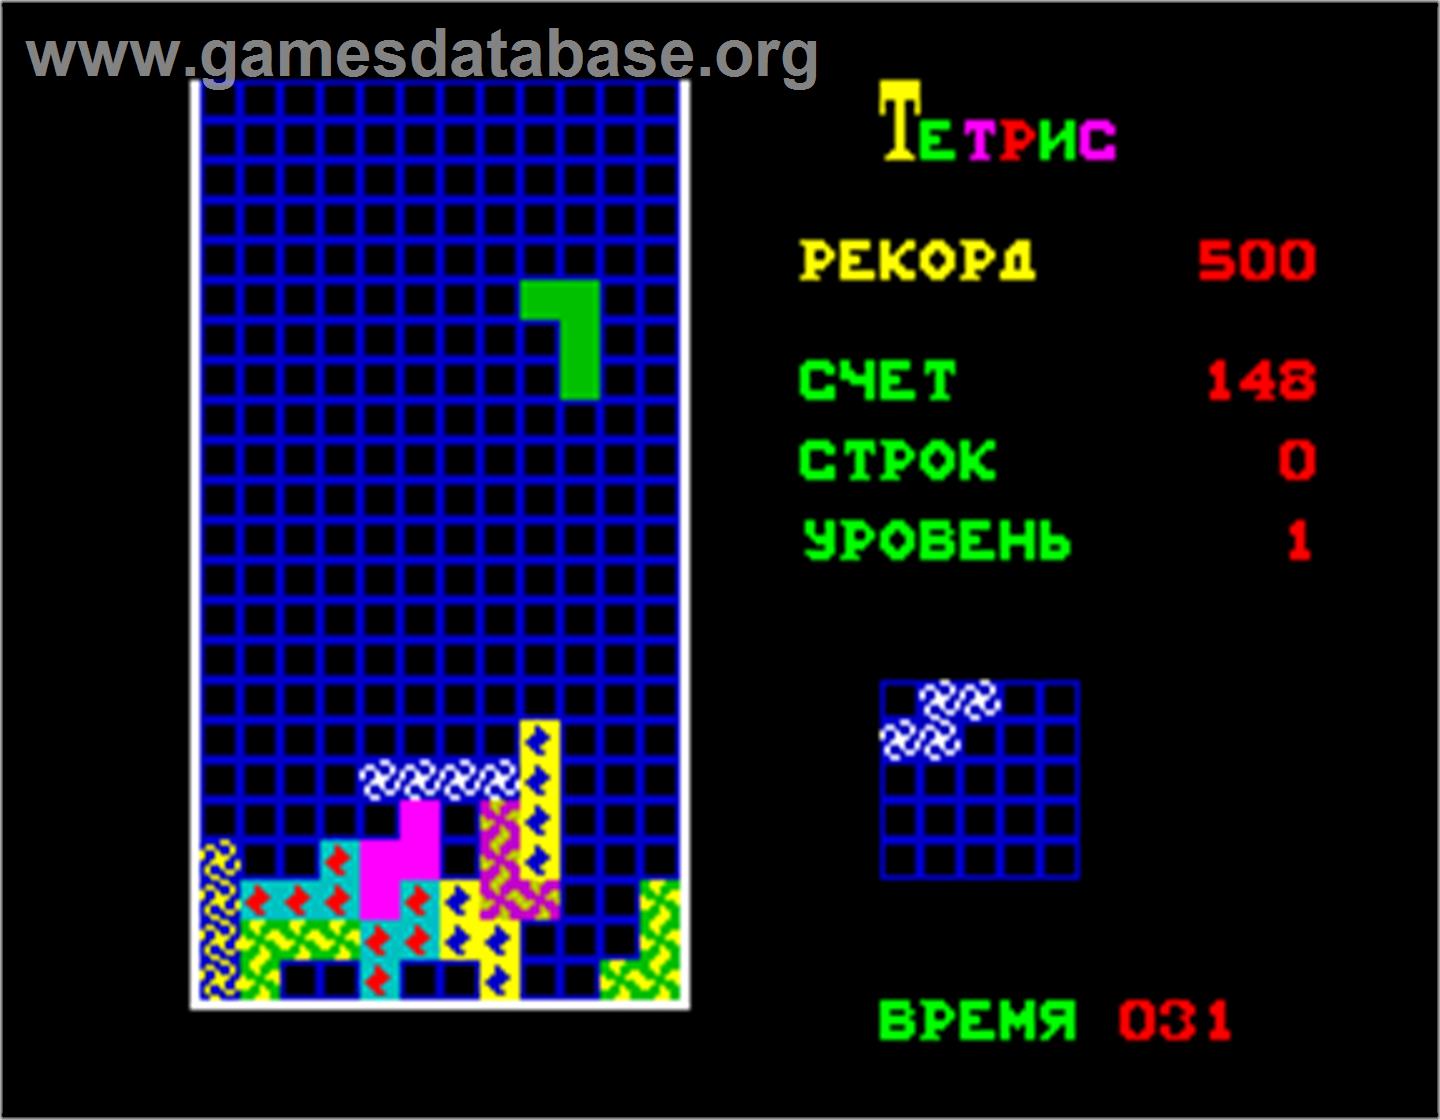 Tetris - Arcade - Artwork - In Game